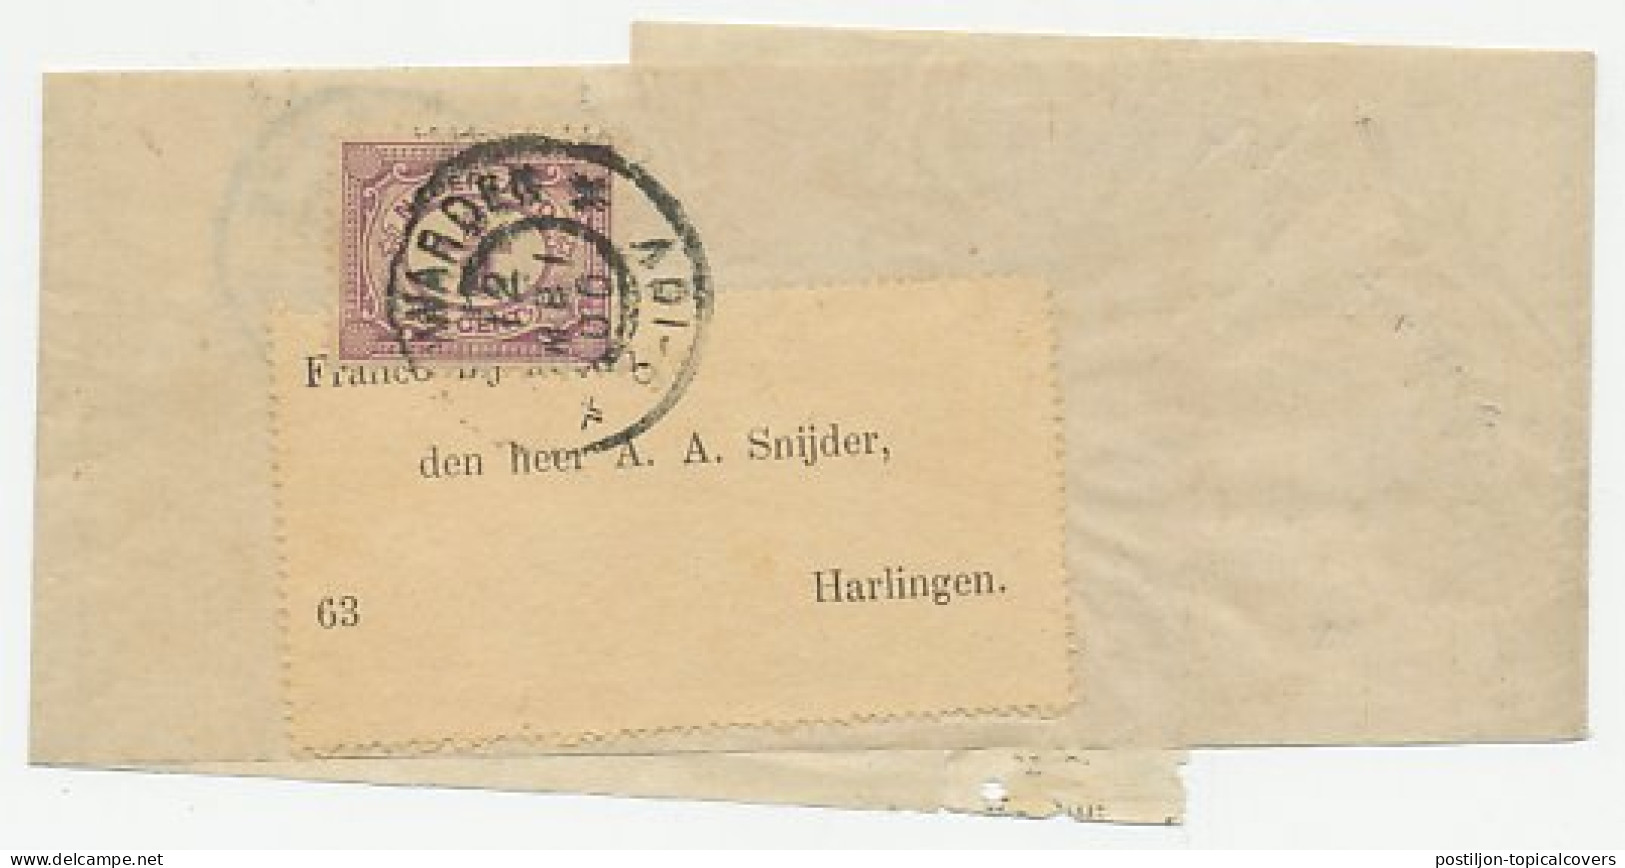 Em. Vurtheim Drukwerk Wikkel Leeuwarden - Harlingen 1900 - Non Classificati